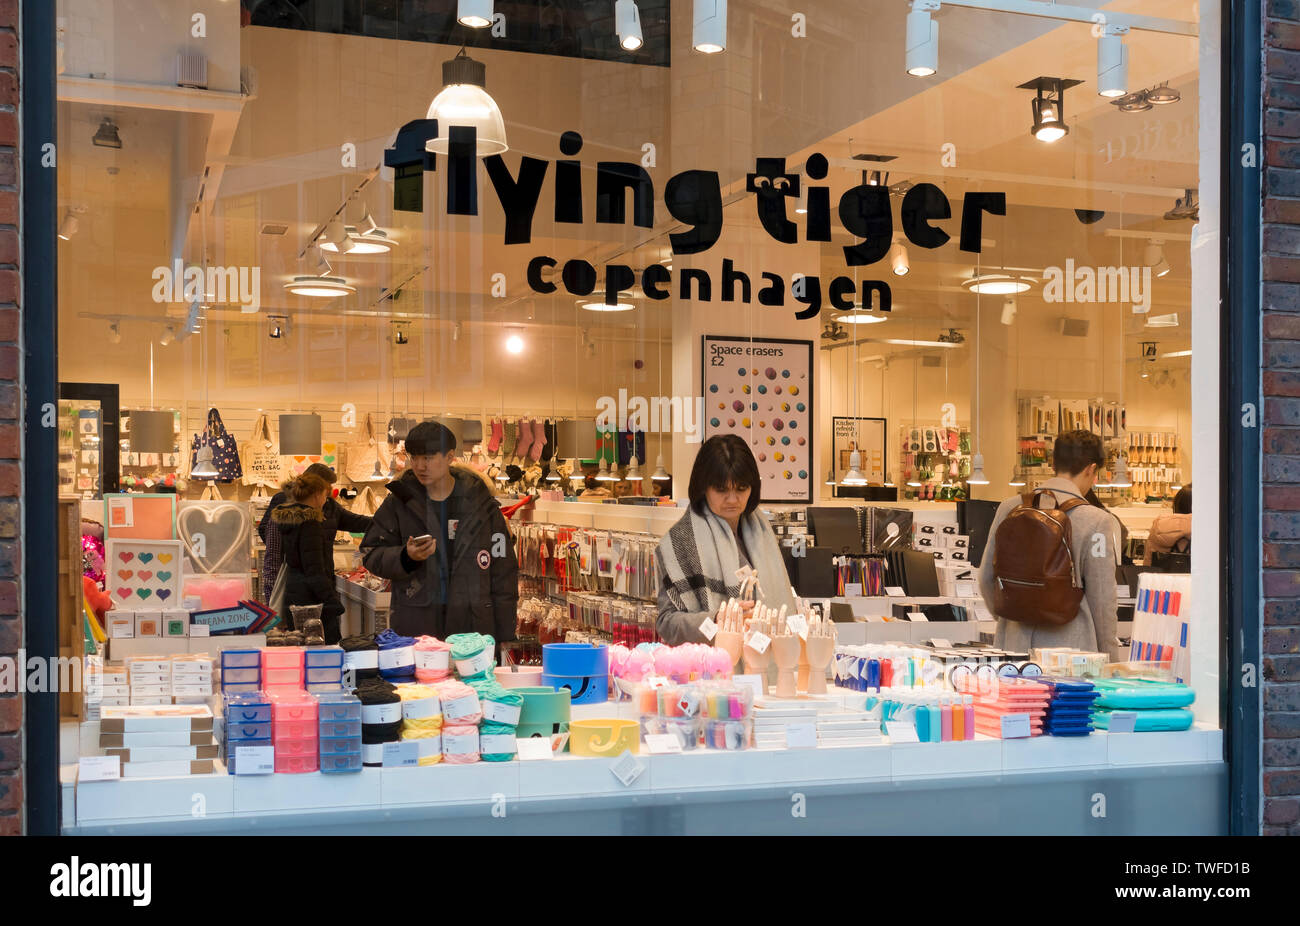 Flying Tiger Copenhagen New York Store